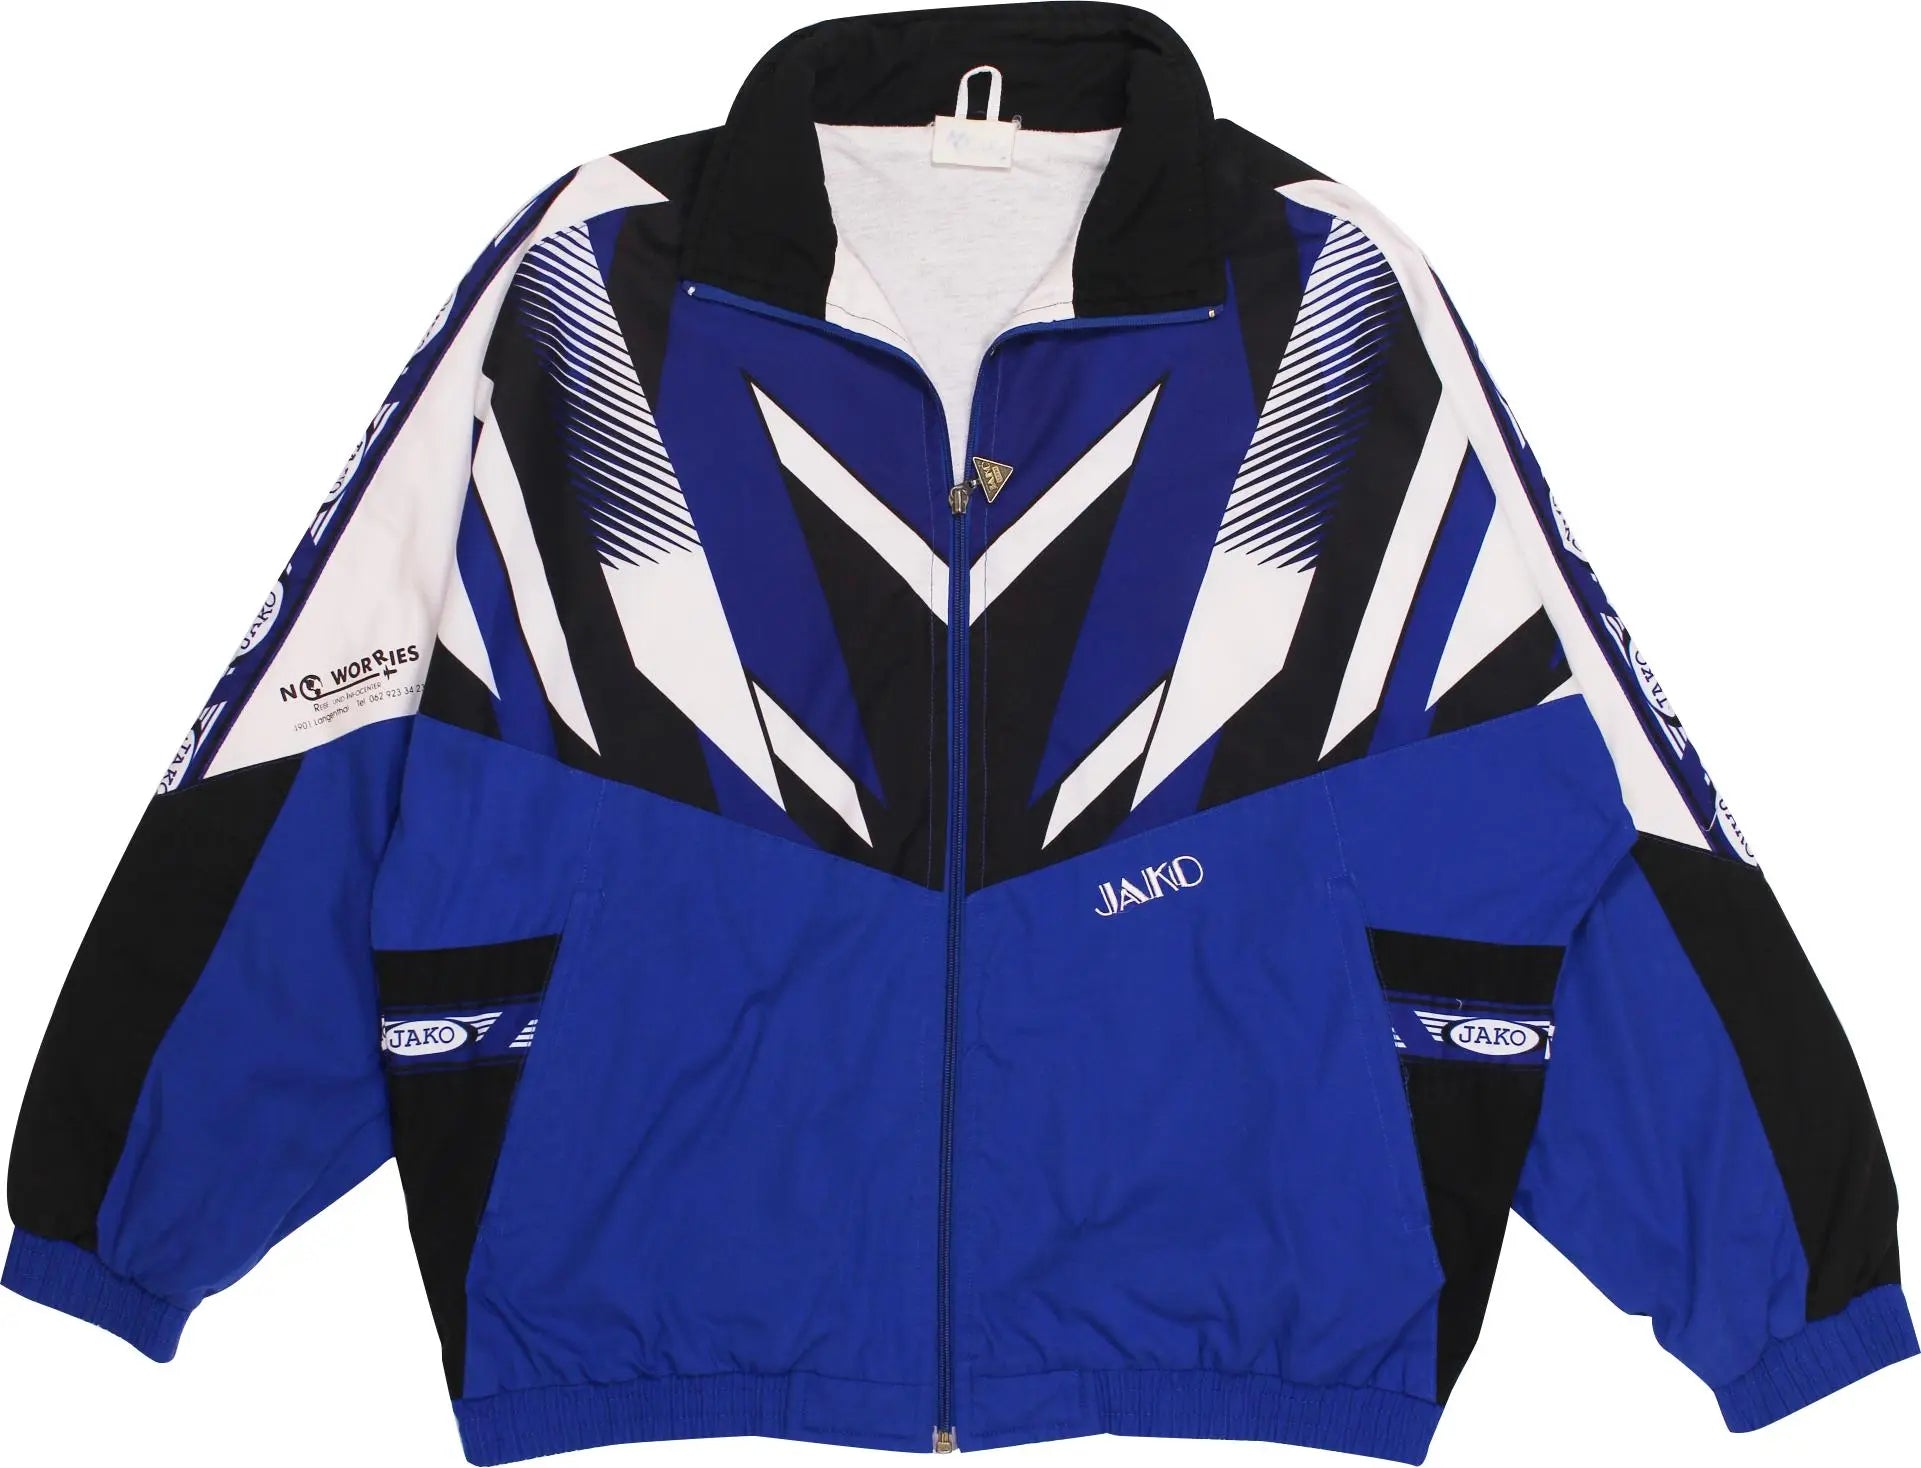 Jako - 90s Jako Sport Jacket- ThriftTale.com - Vintage and second handclothing